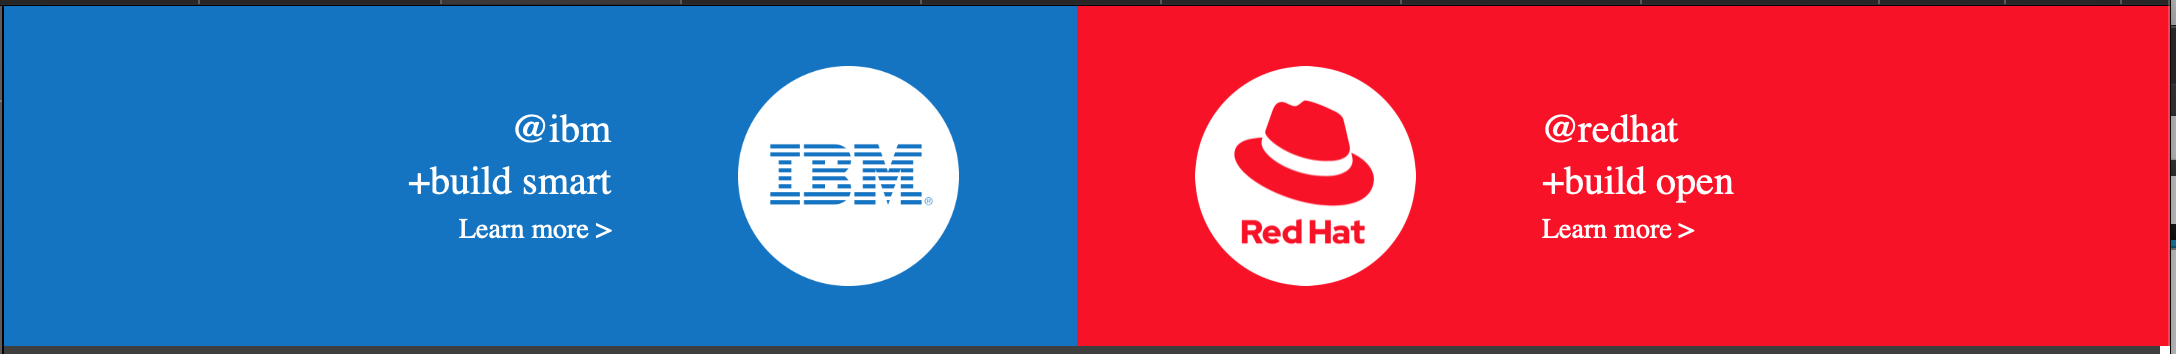 IBM and Redhat: